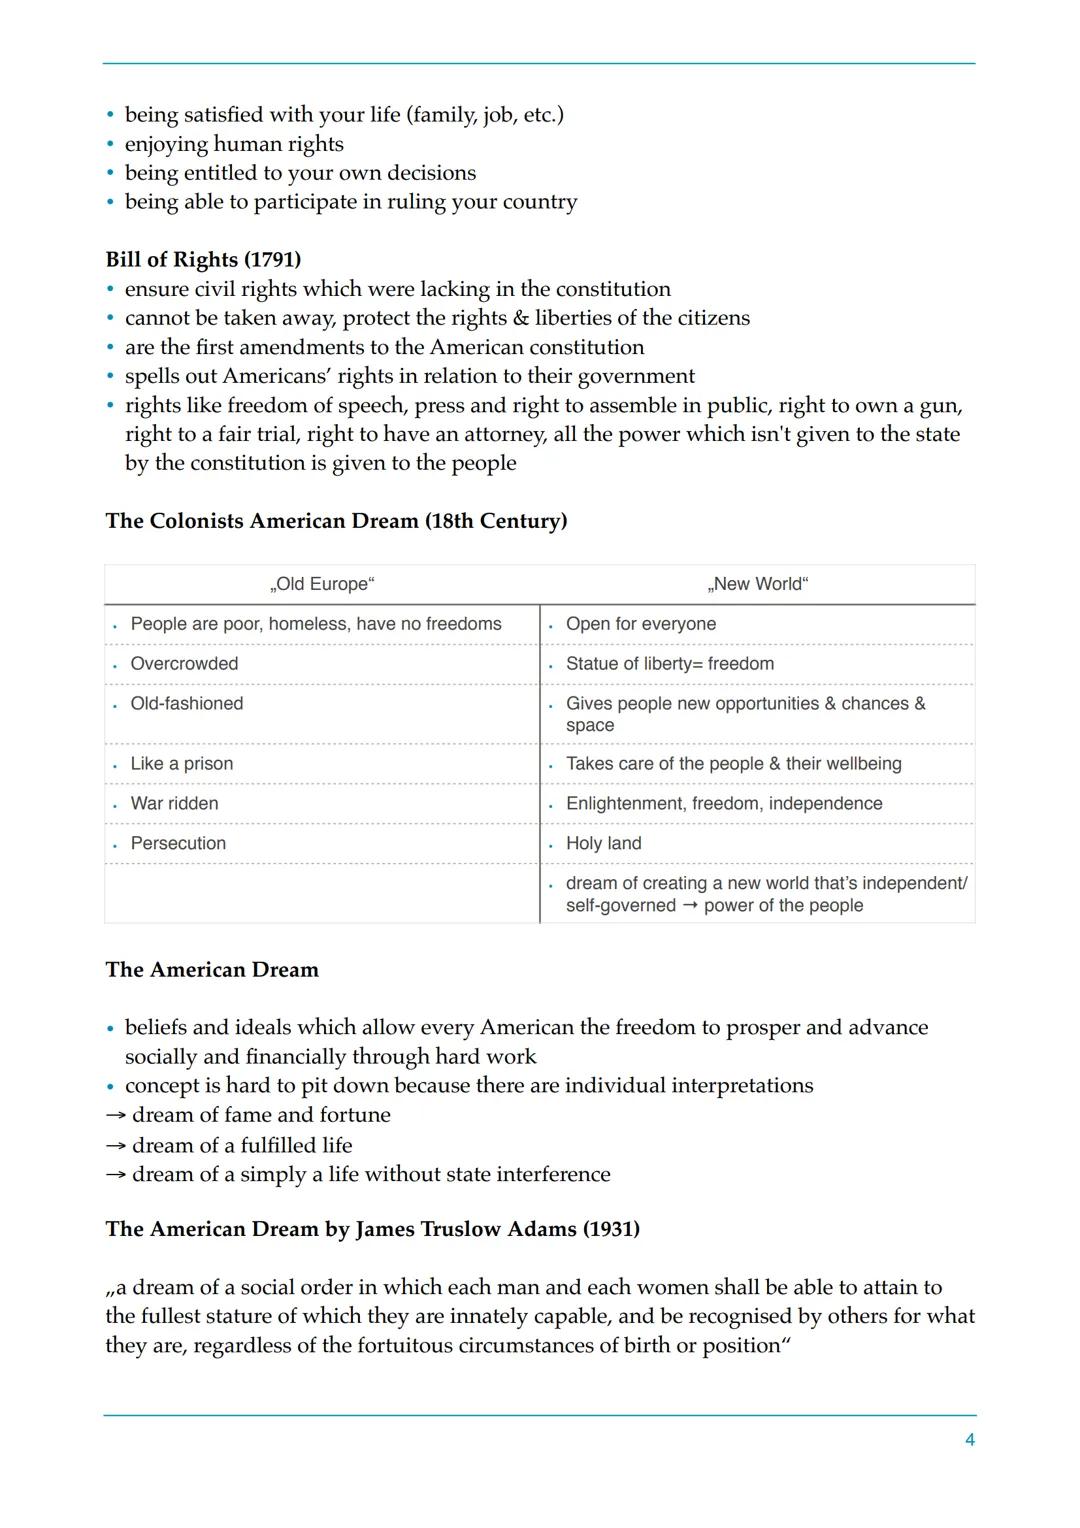 ENGLISCH LK
Abitur 2020
Lernzettel
99 punctuation
adjective
ENGLISH
(a)
noun) subject & Table of contents
1. American Dream: Amerikanischer 